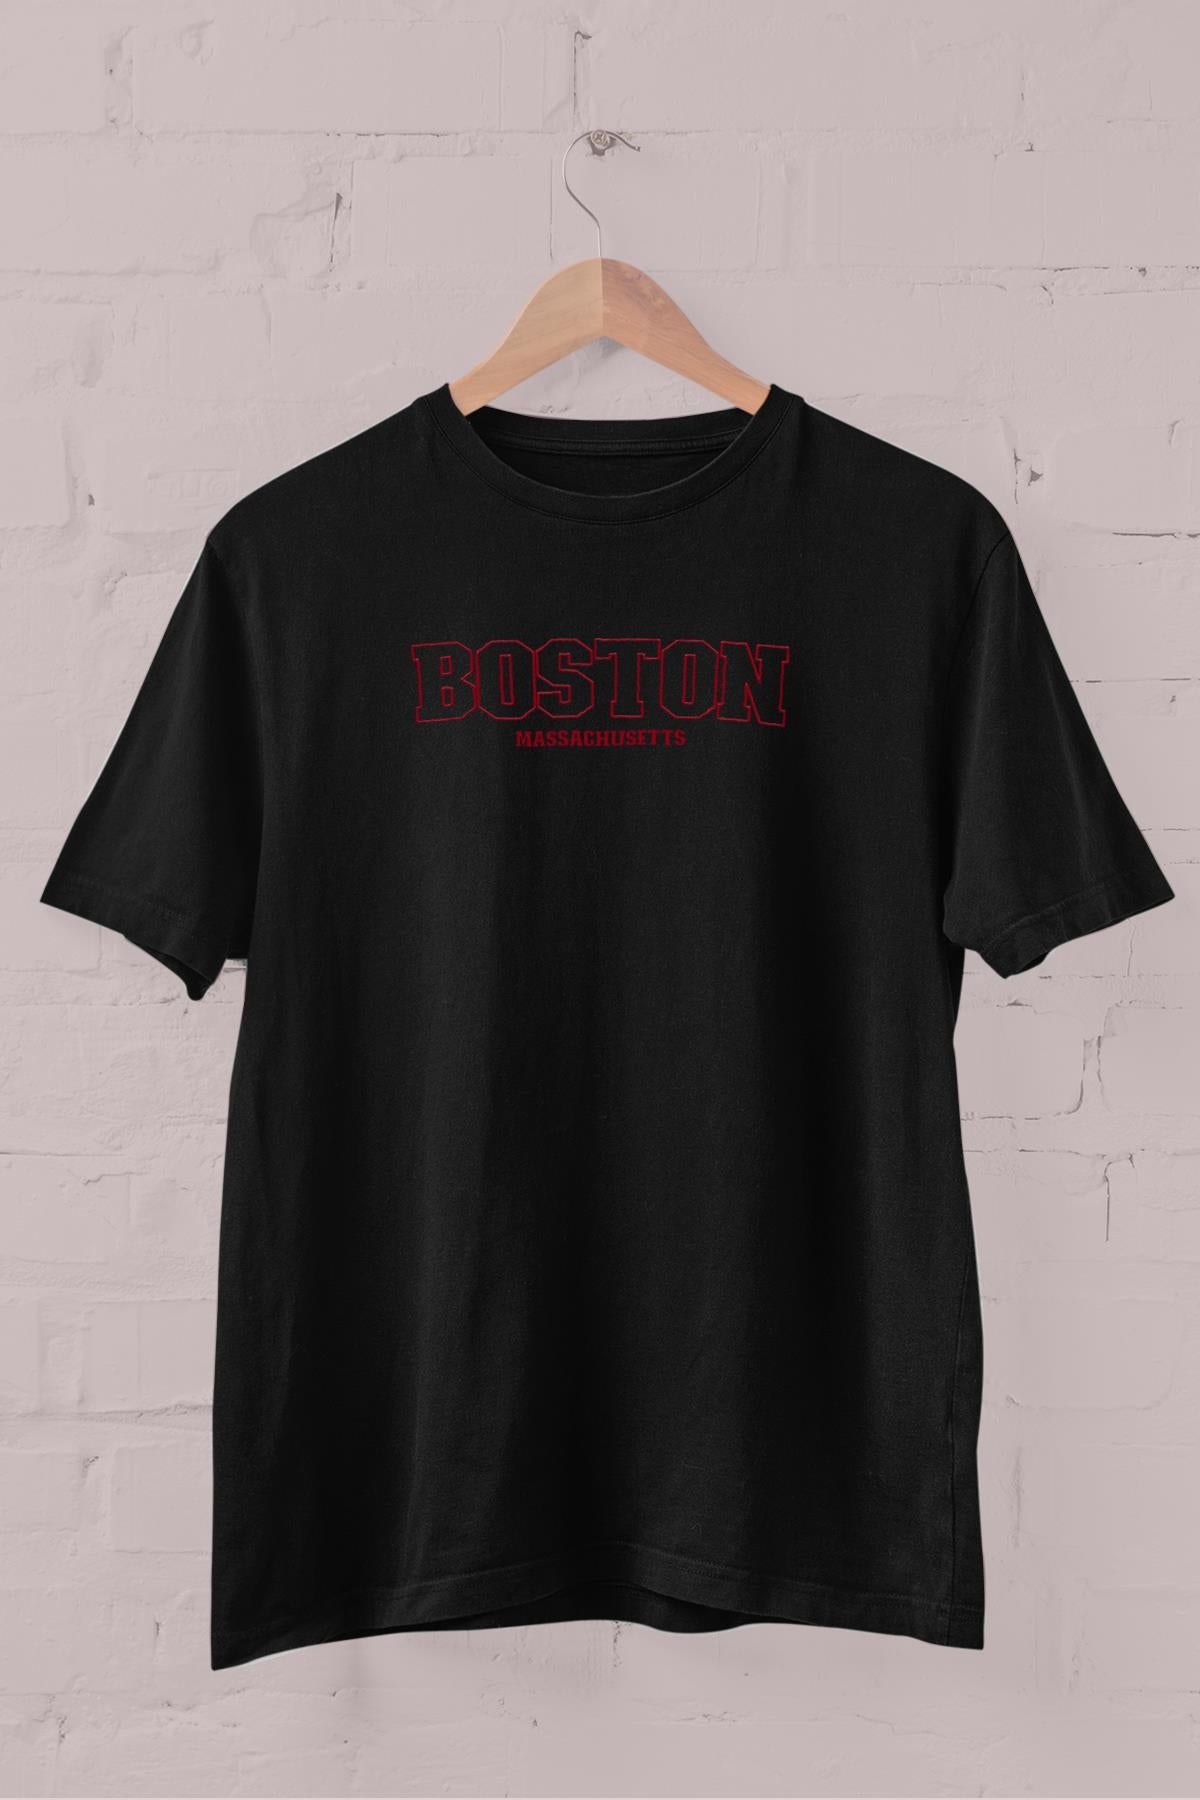 Boston Printed Crew Neck Men's T -shirt